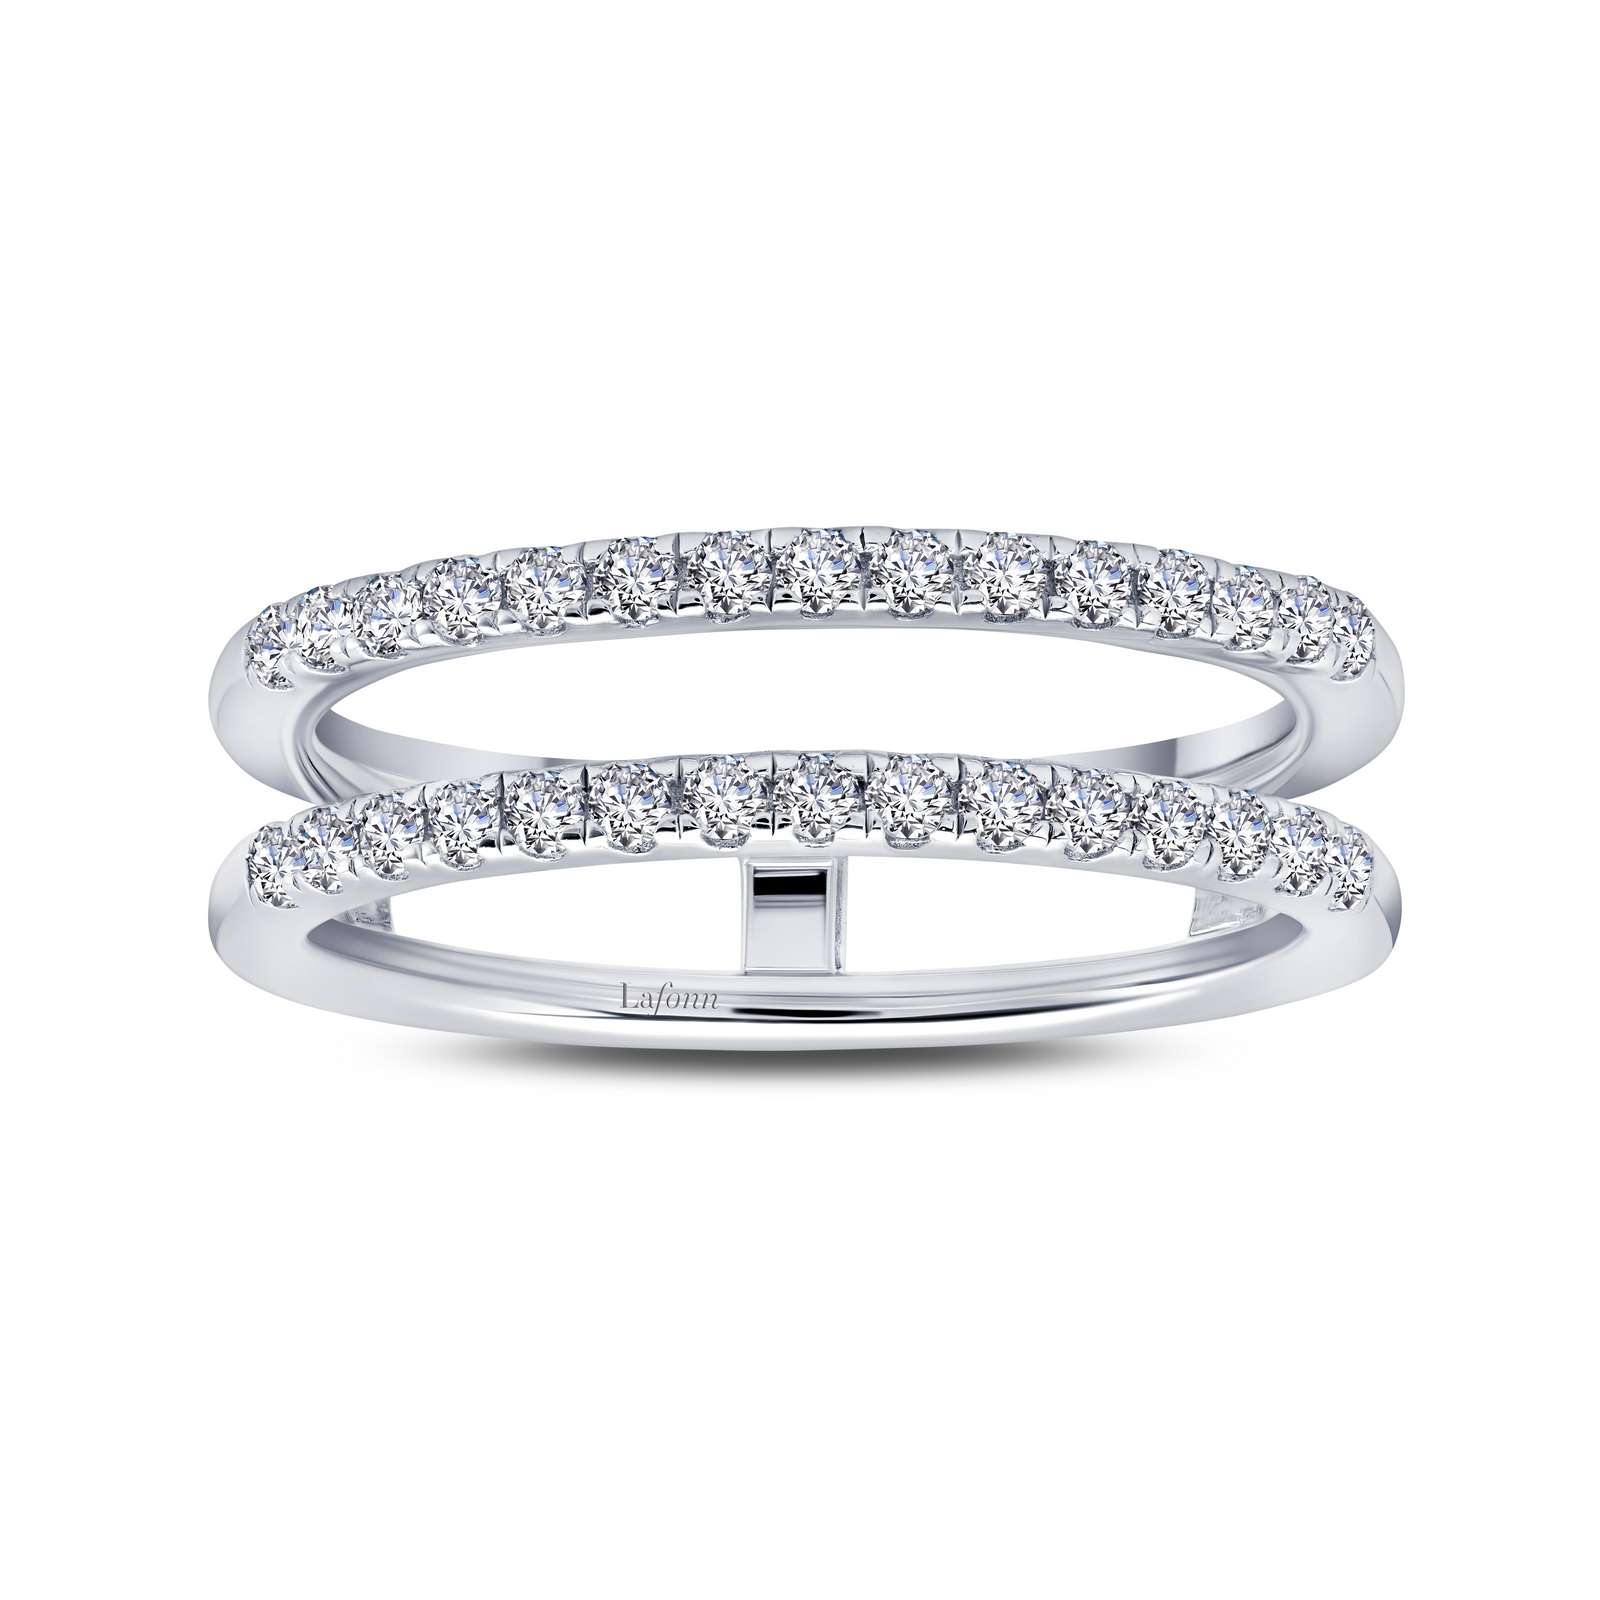 Versatile Ring Enhancer Griner Jewelry Co. Moultrie, GA